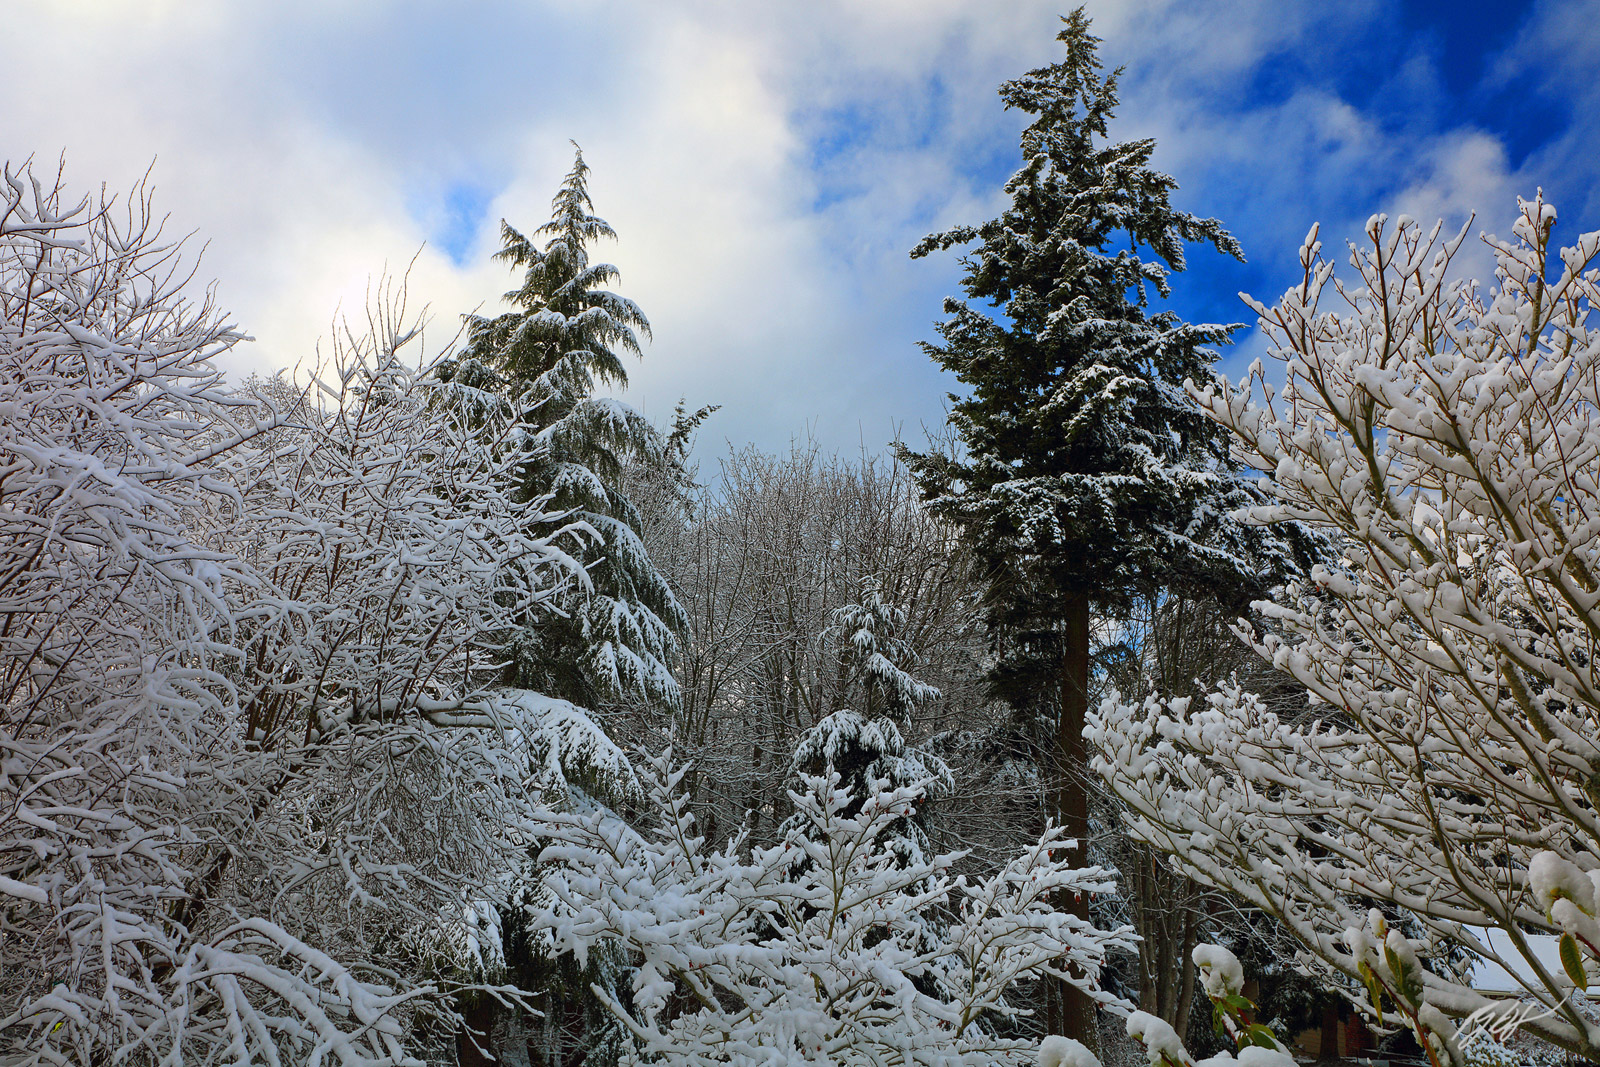 Snowy Tees in Winter from Mukilteo, Washington